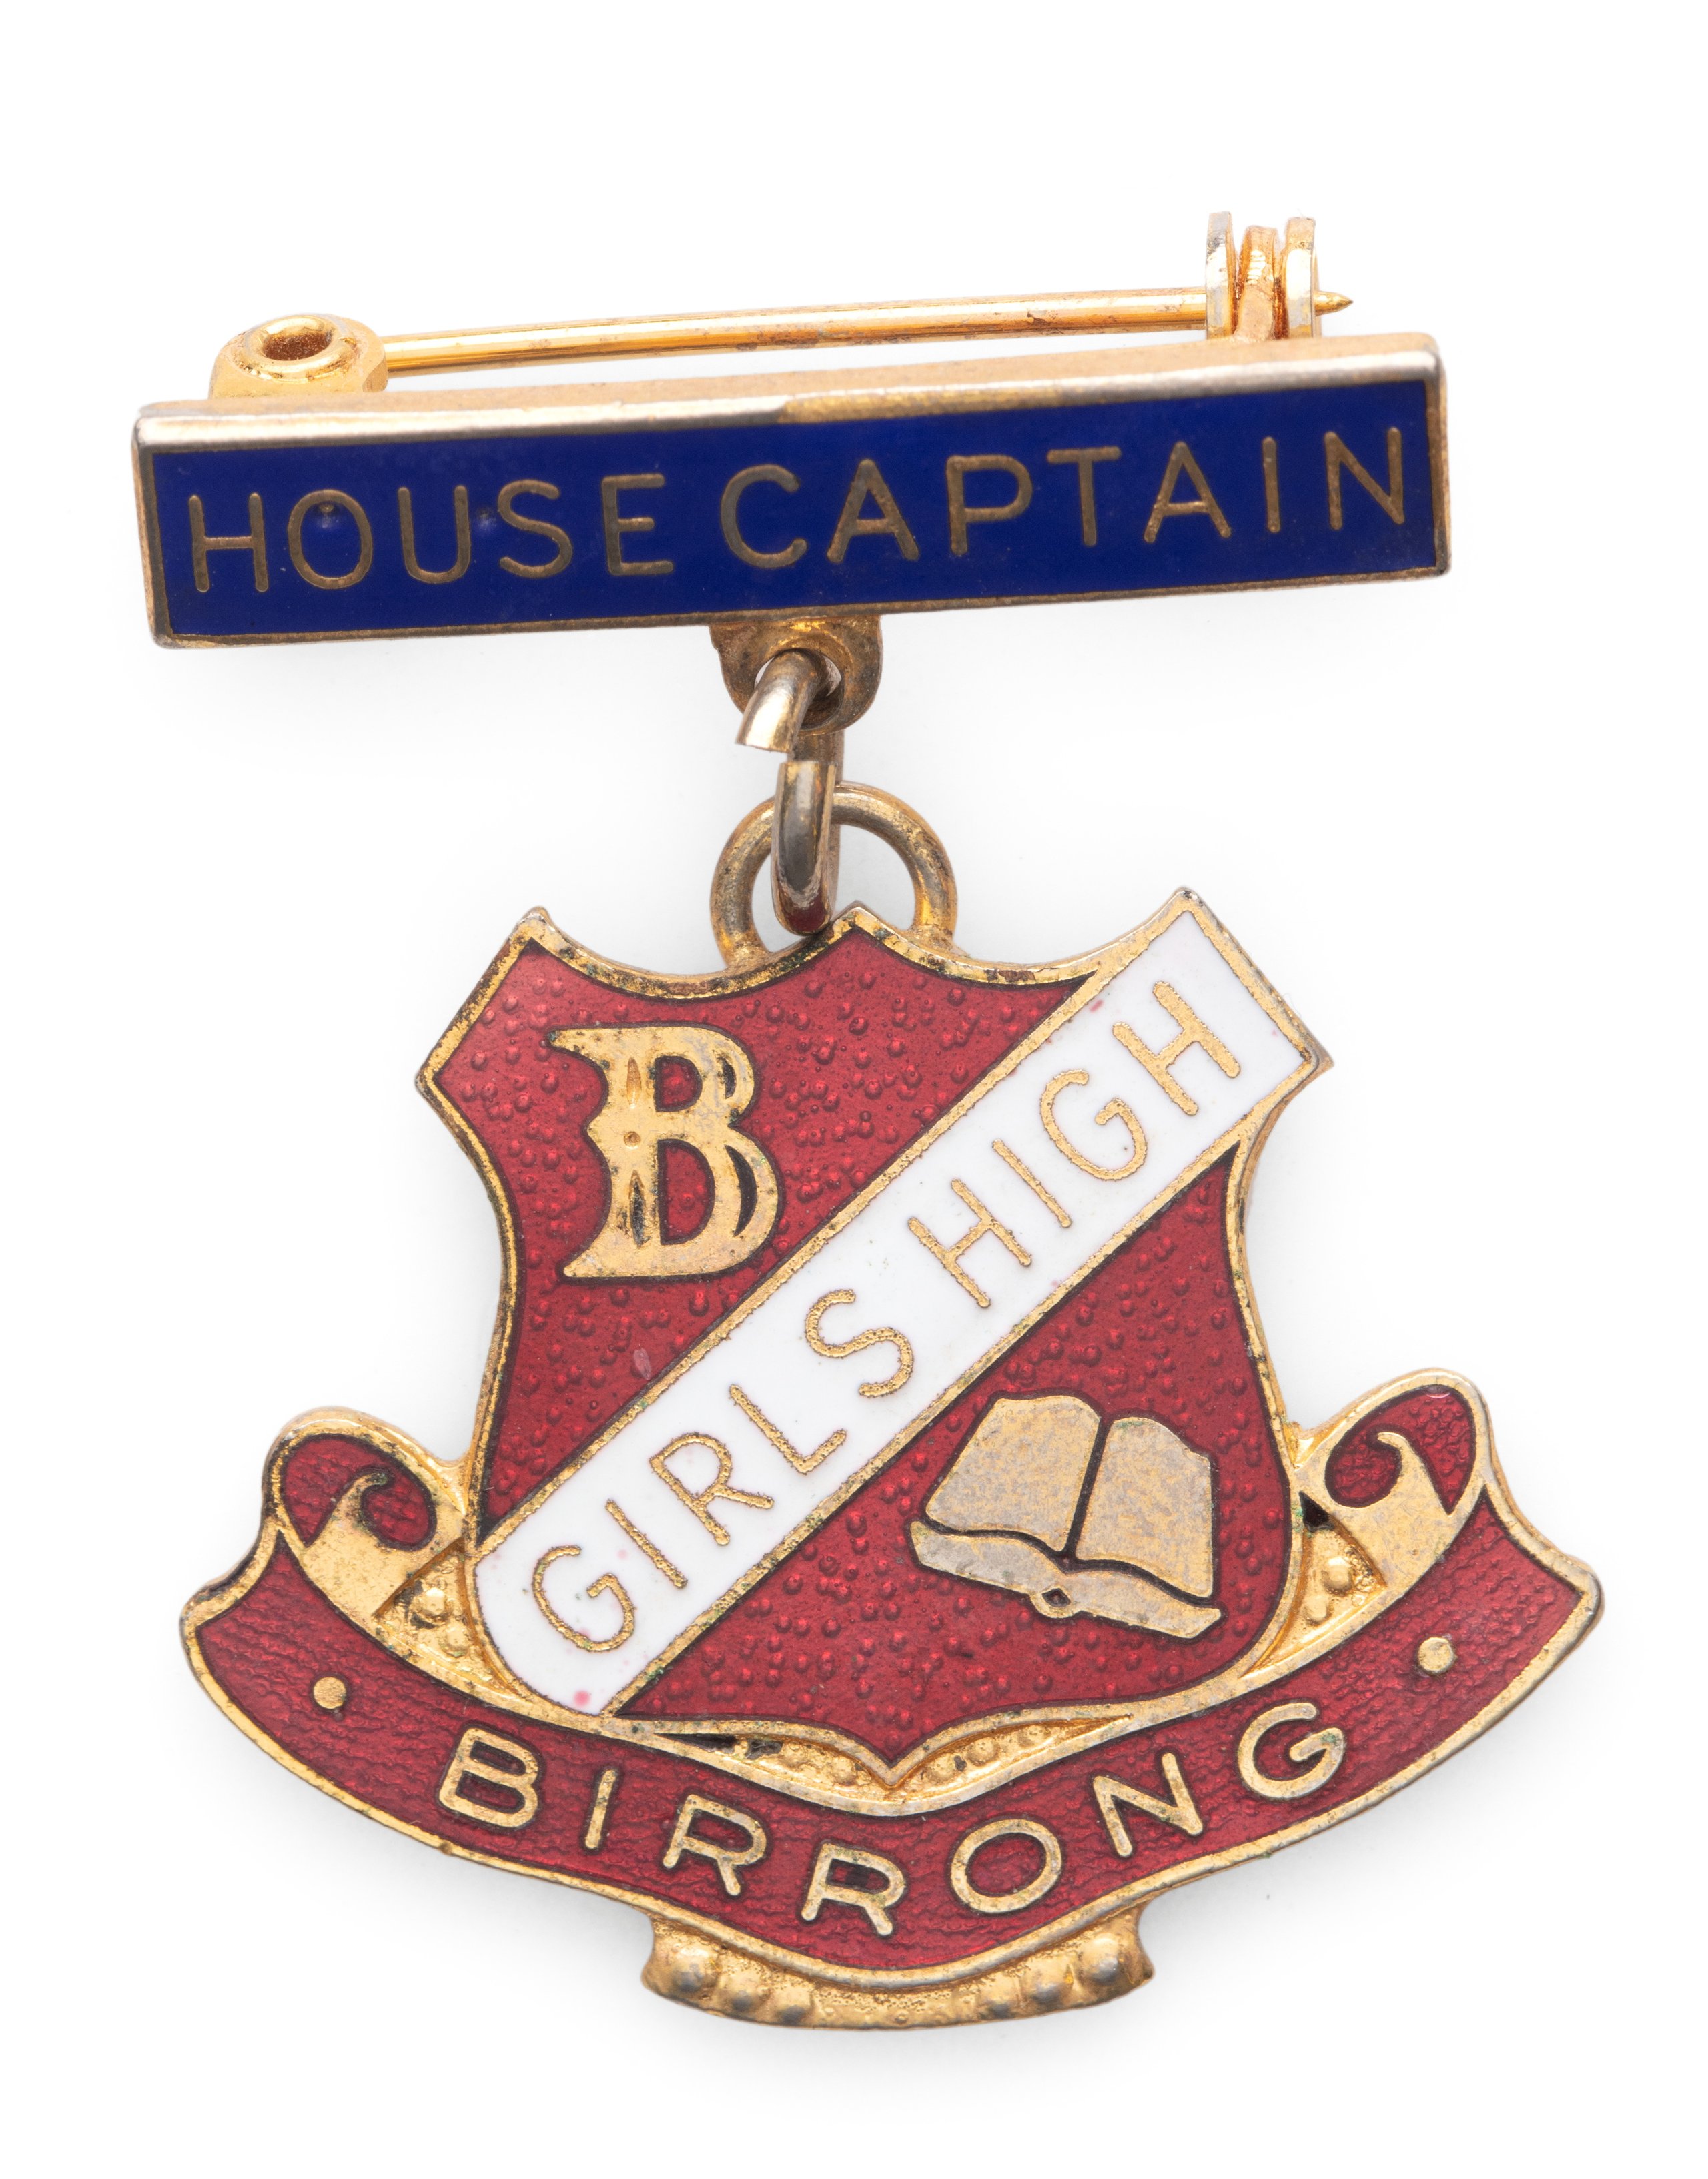 'House Captain' school badge